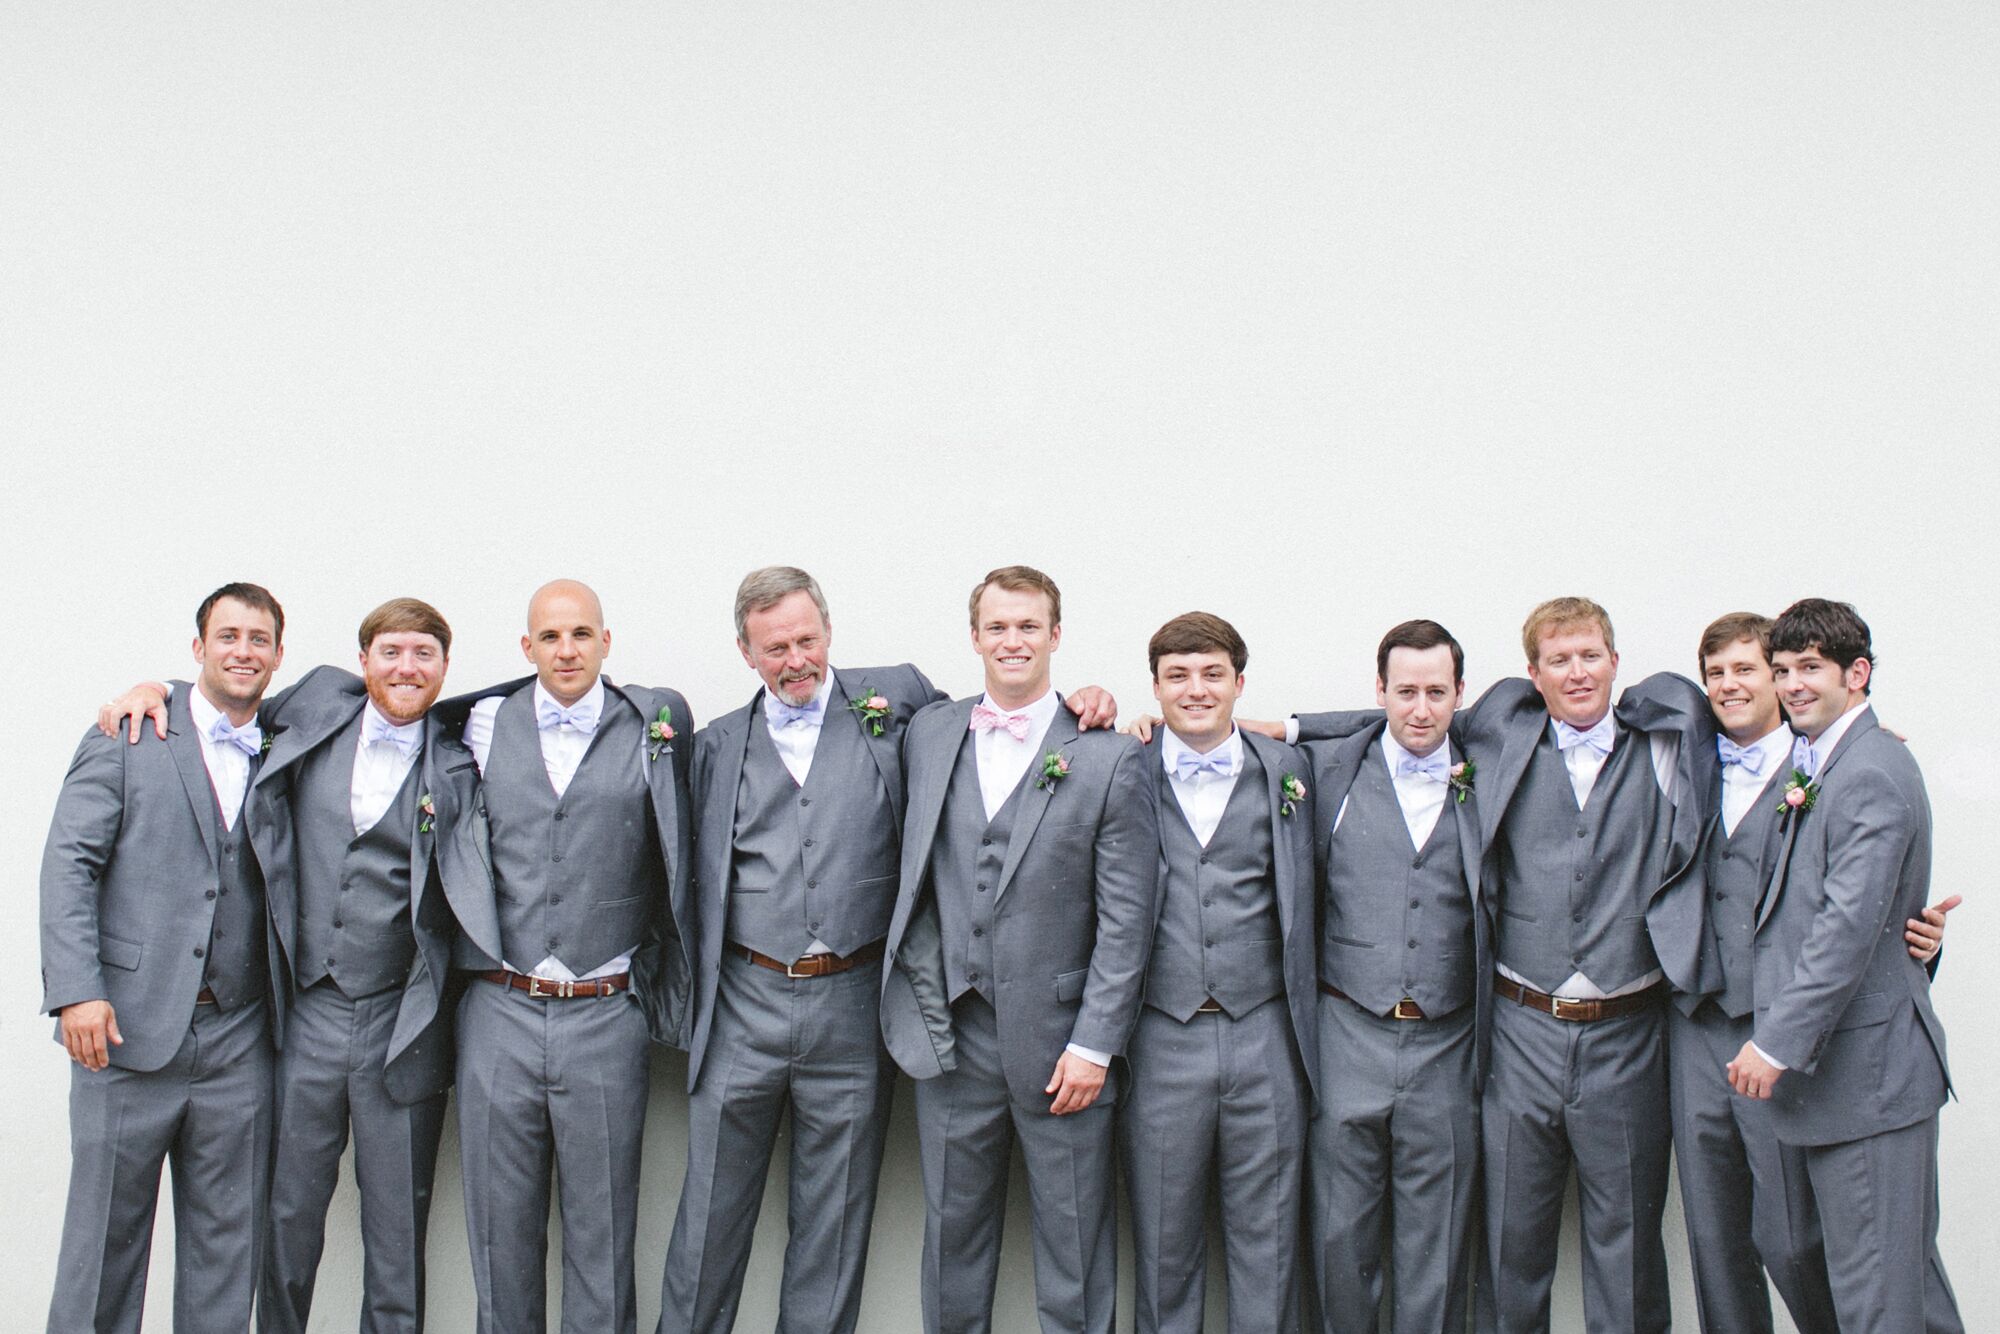 Groomsmen in Gray Three-Piece Suits from Men's Warehouse